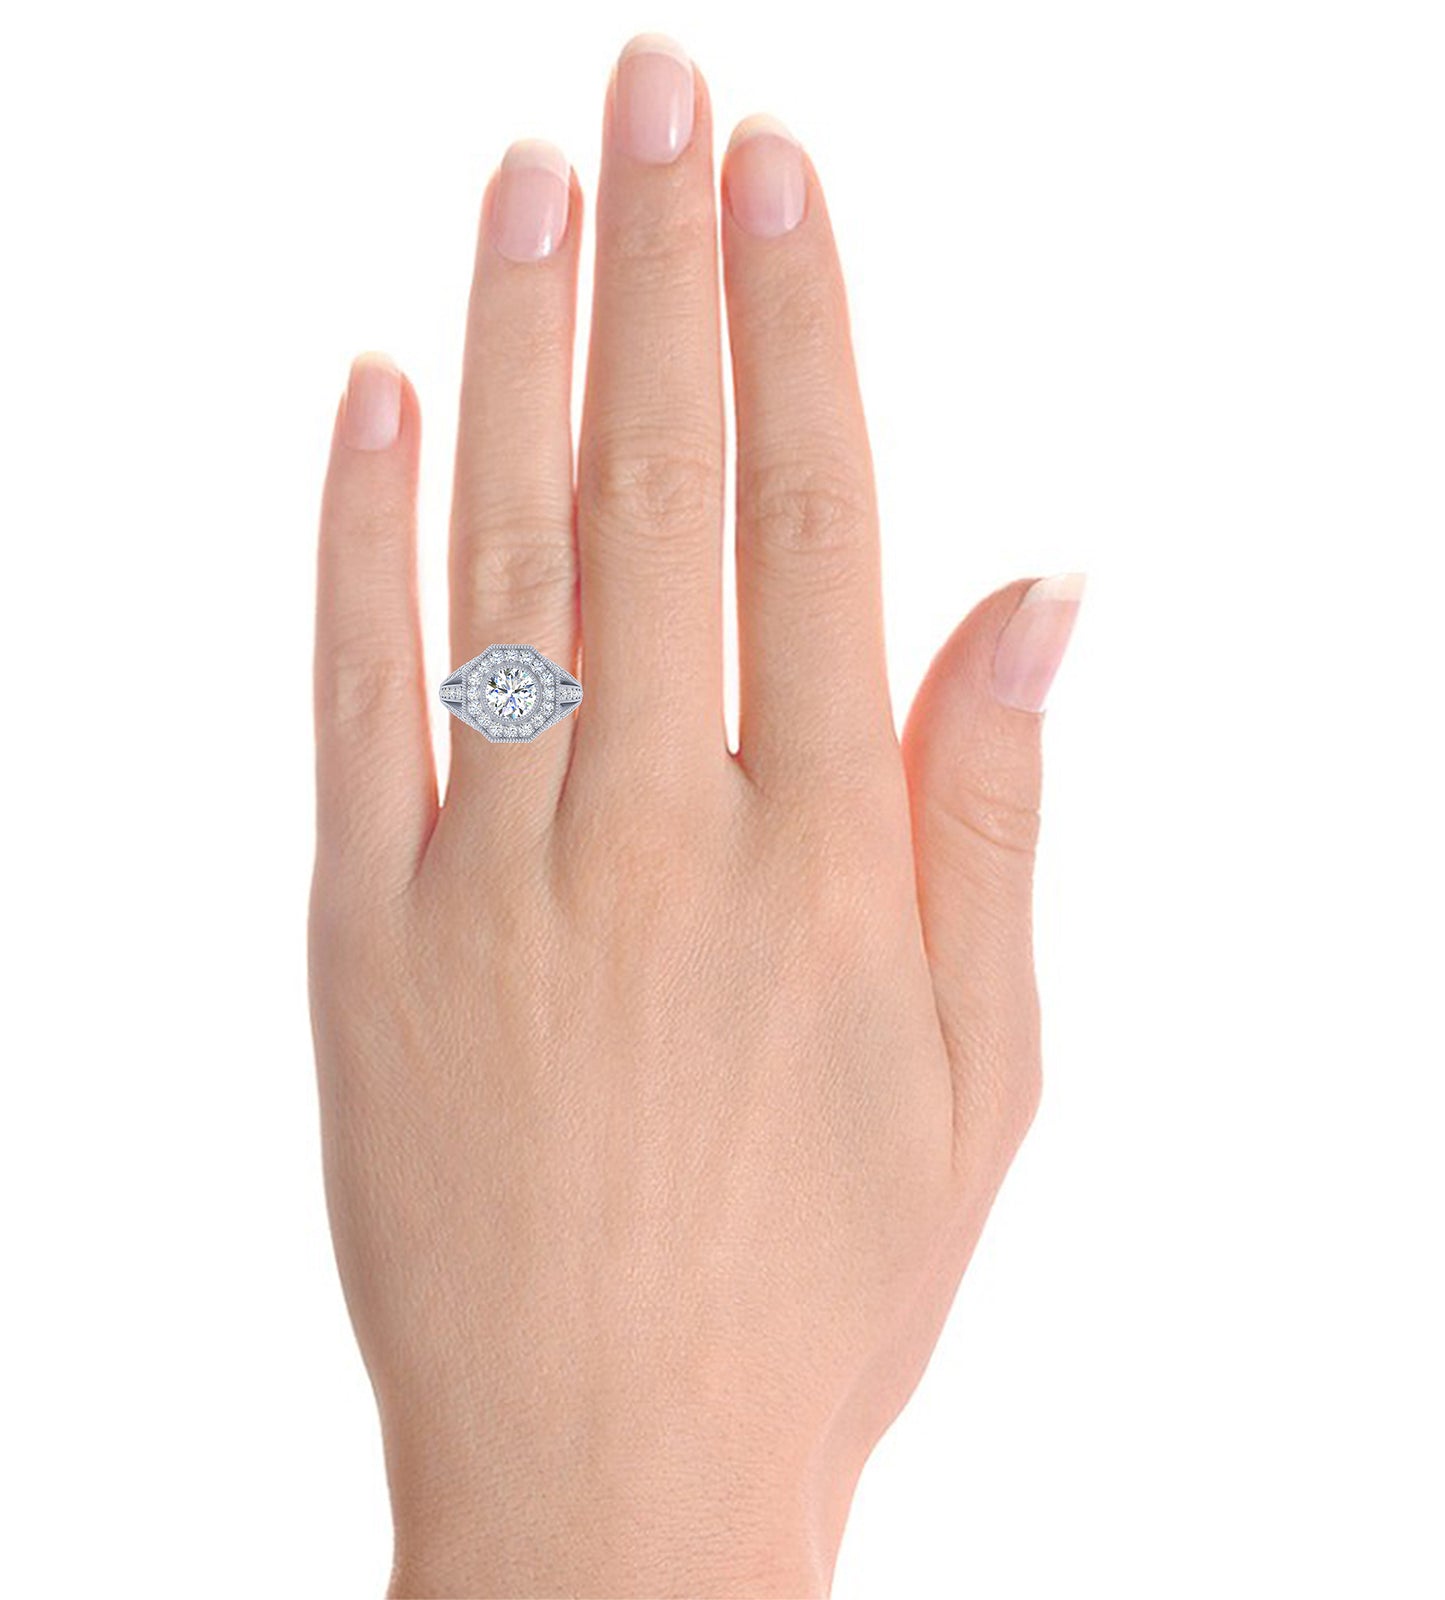 BAROQUE STYLE HALO DIAMOND ENGAGEMENT RING